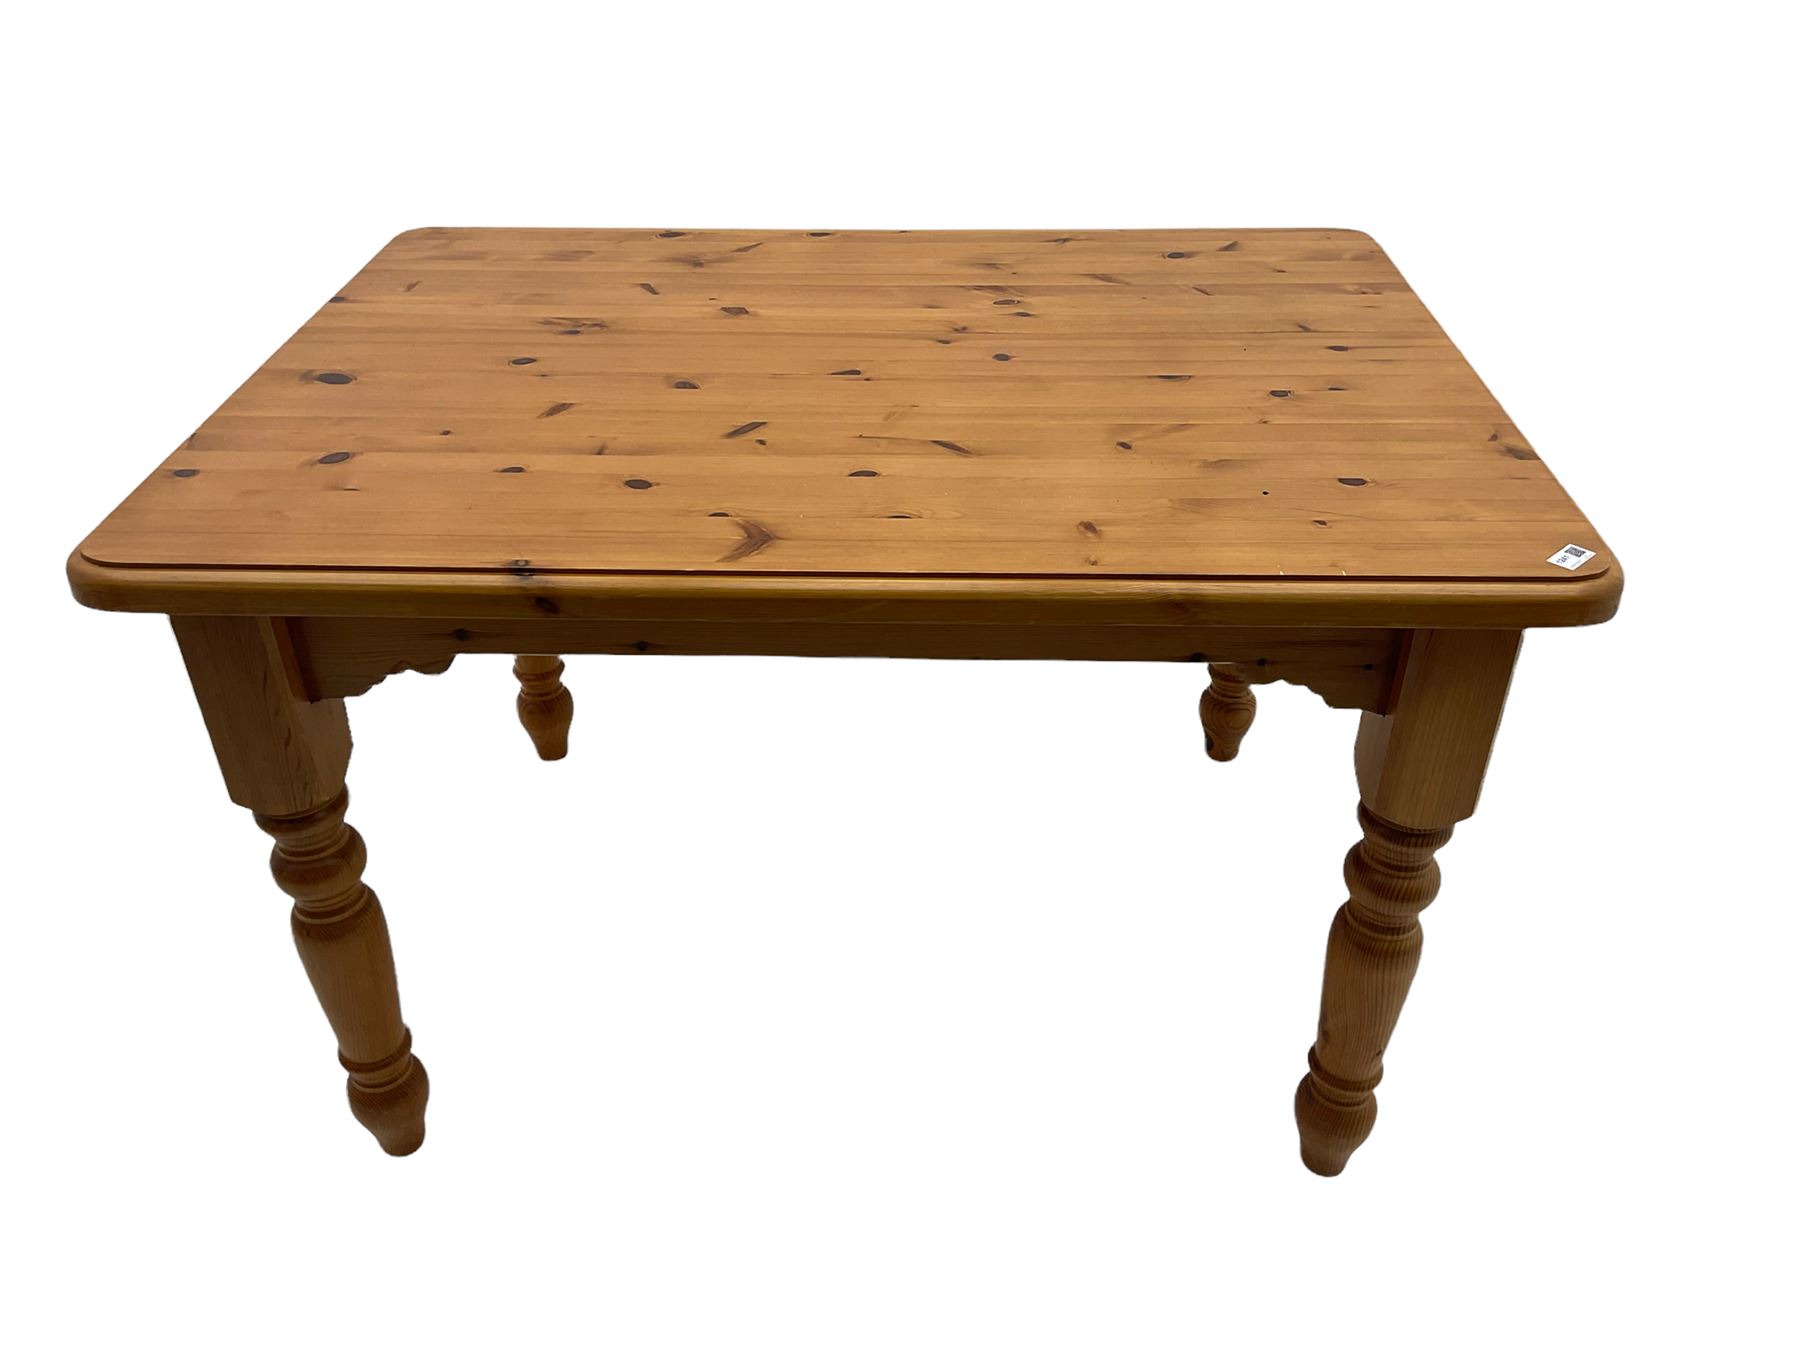 Rectangular pine dining table - Image 5 of 6